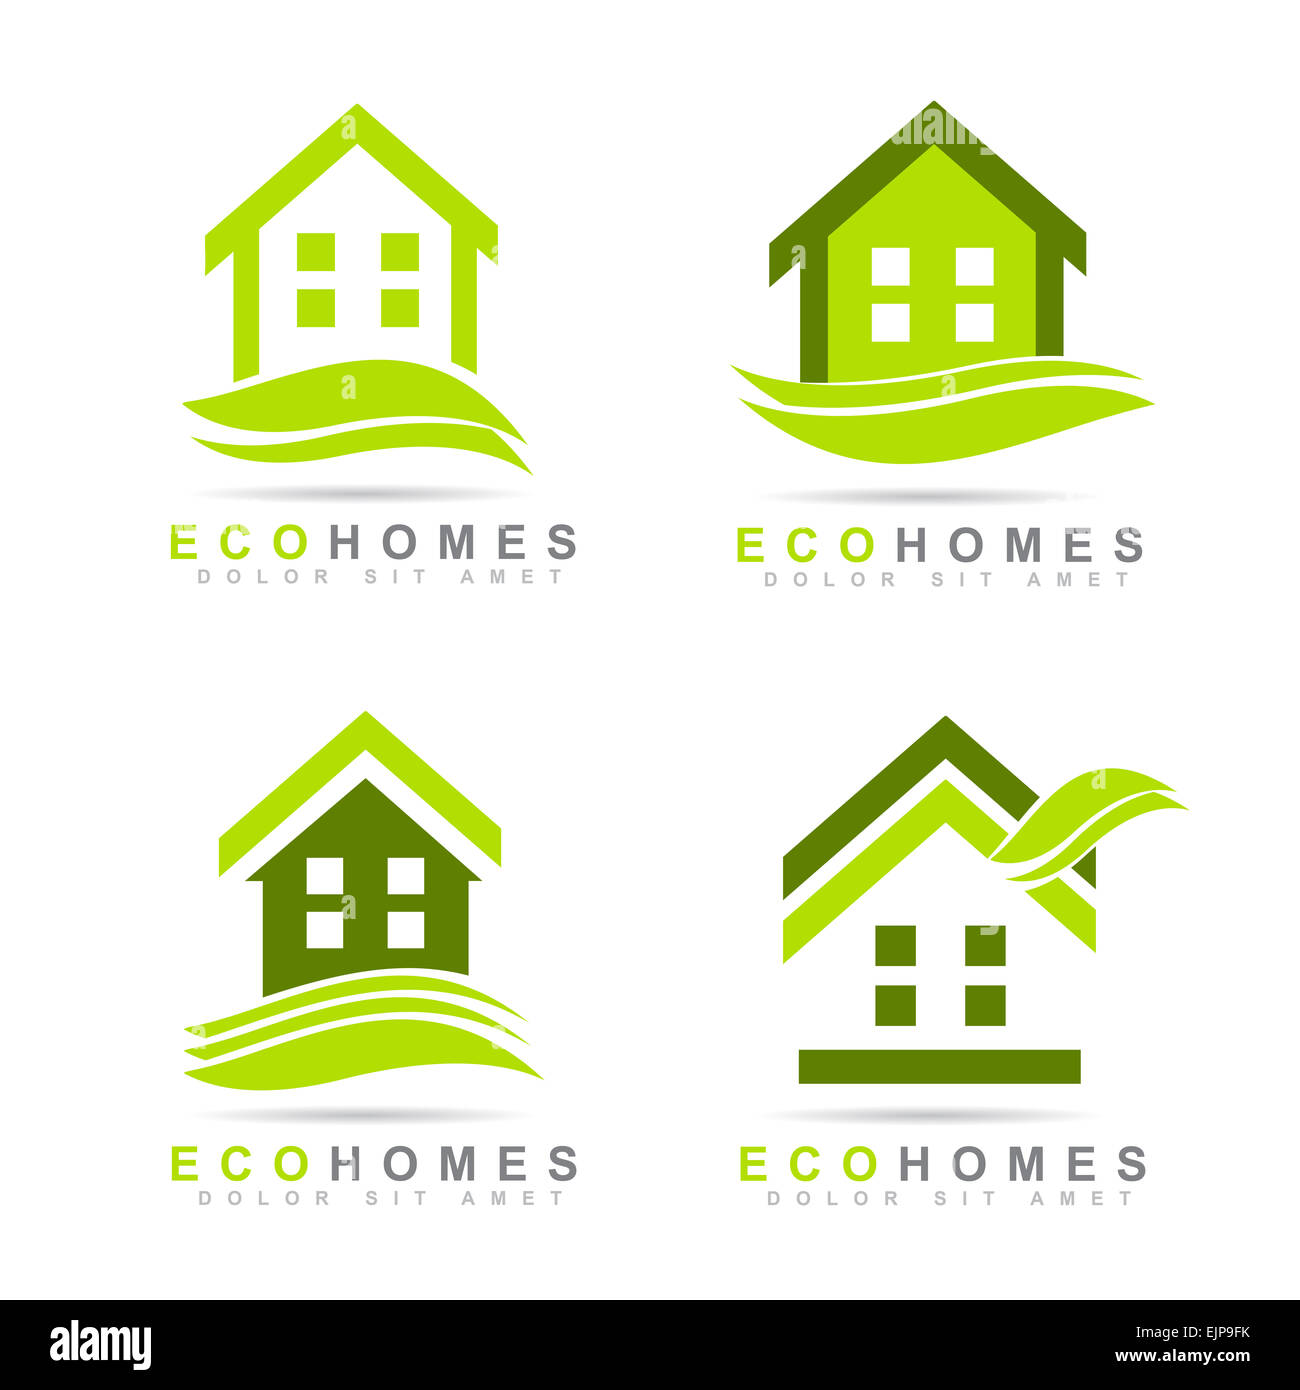 Creative vector template of green ecological logo icons real estate set Stock Photo